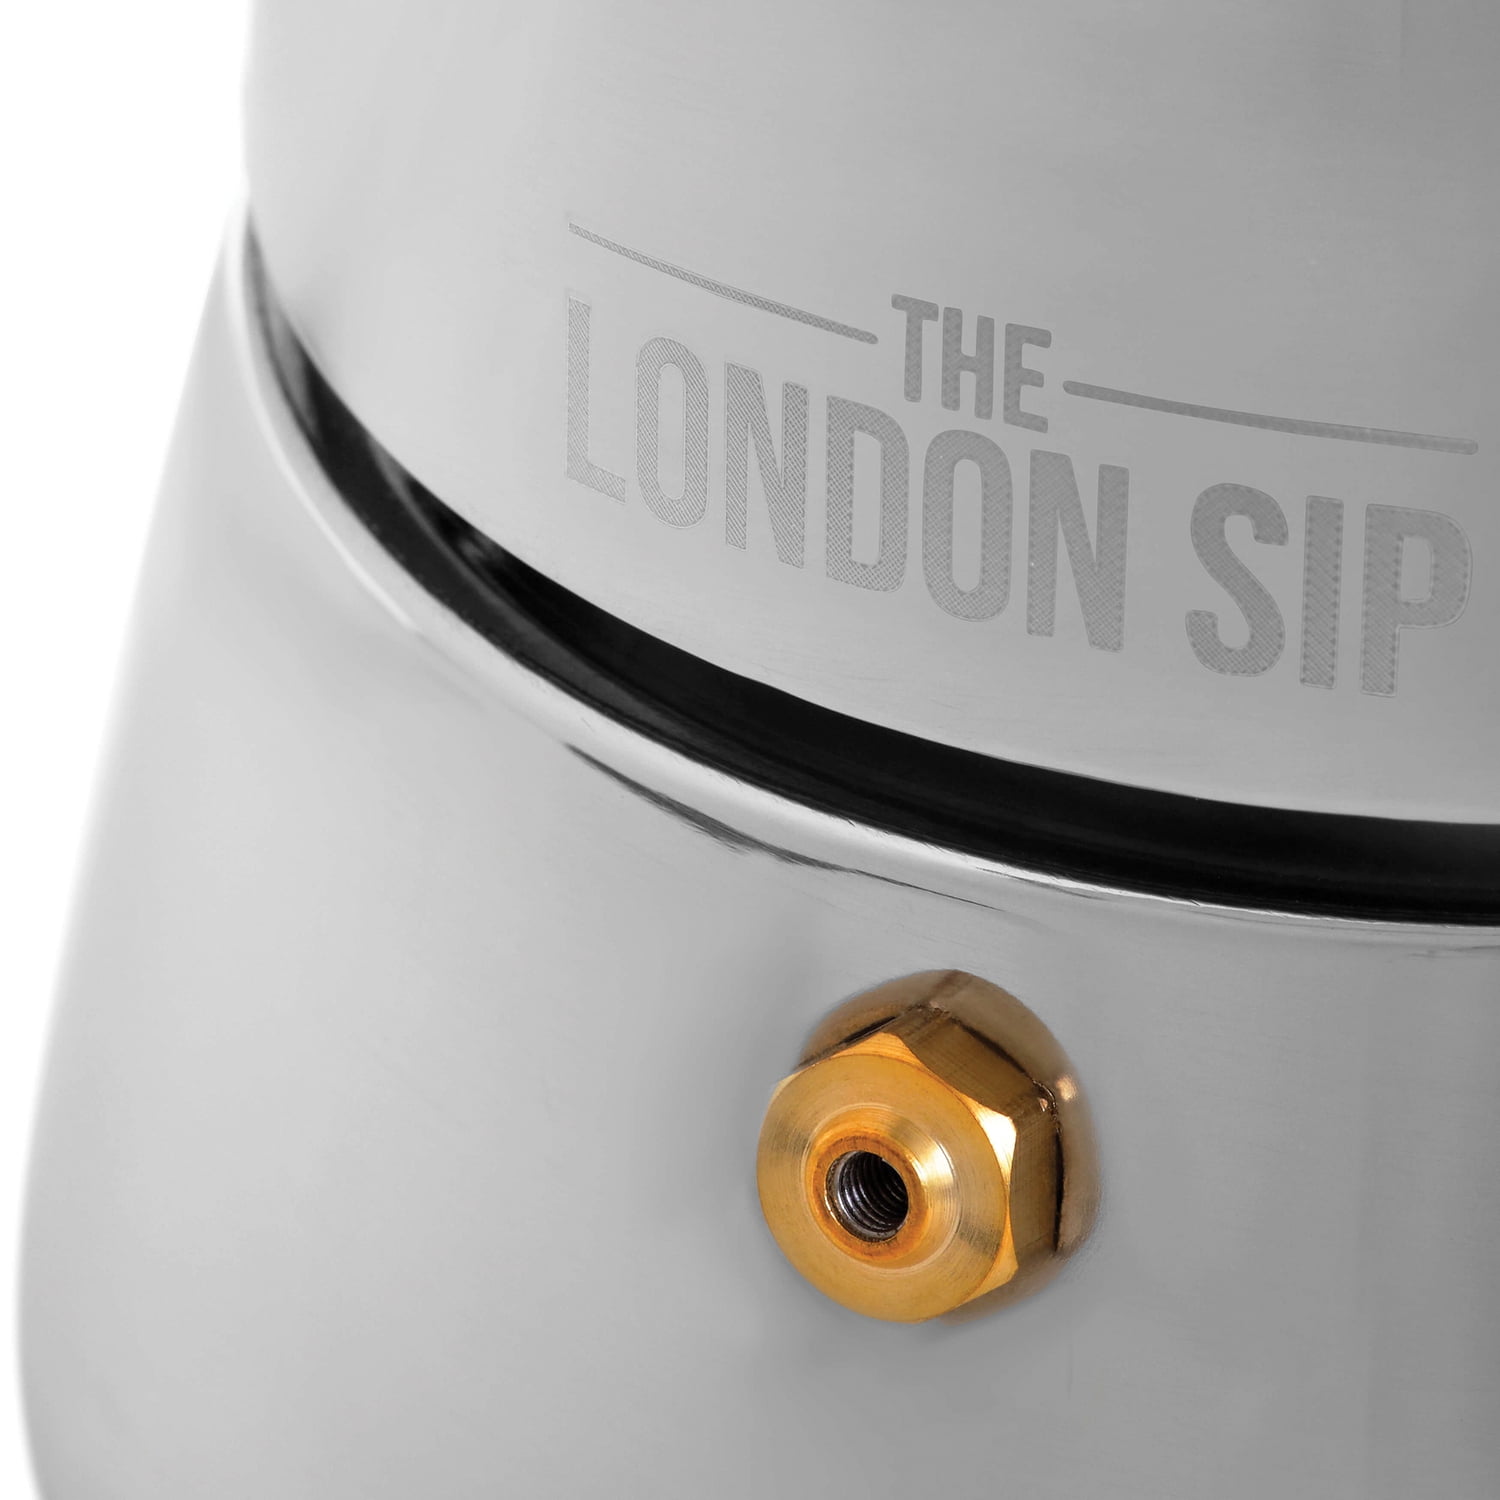 Escali London Sip - Matte Black Stainless Steel Stovetop Espresso